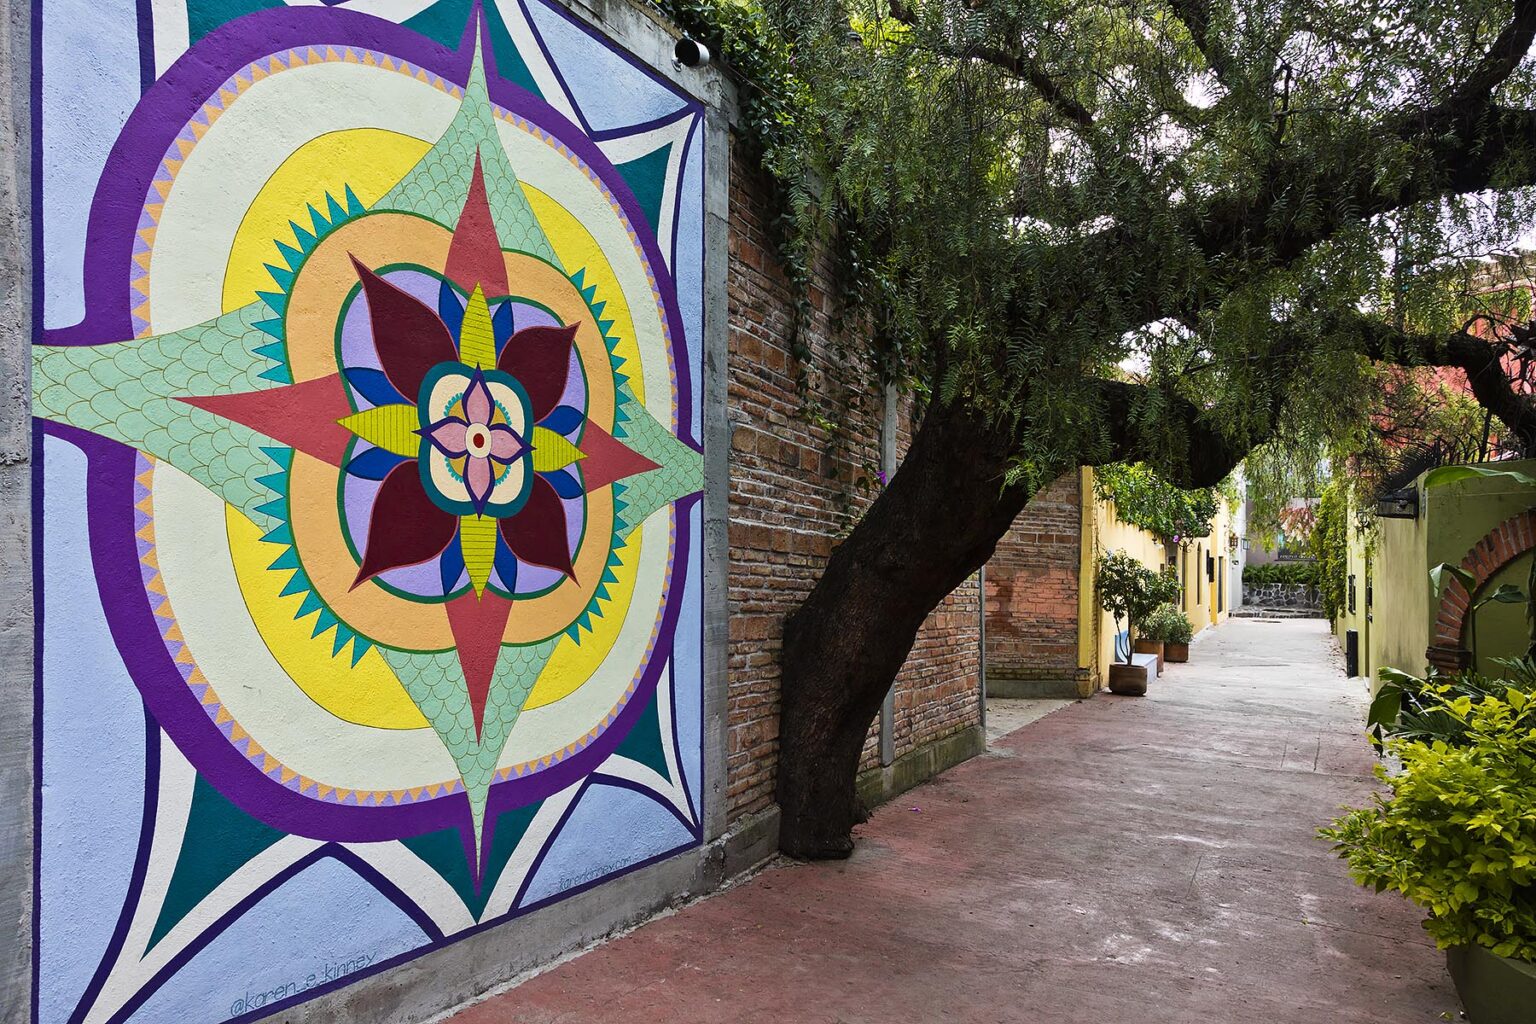 Murals are a part of the local art scene - SAN MIGUEL DE ALLENDE, MEXICO